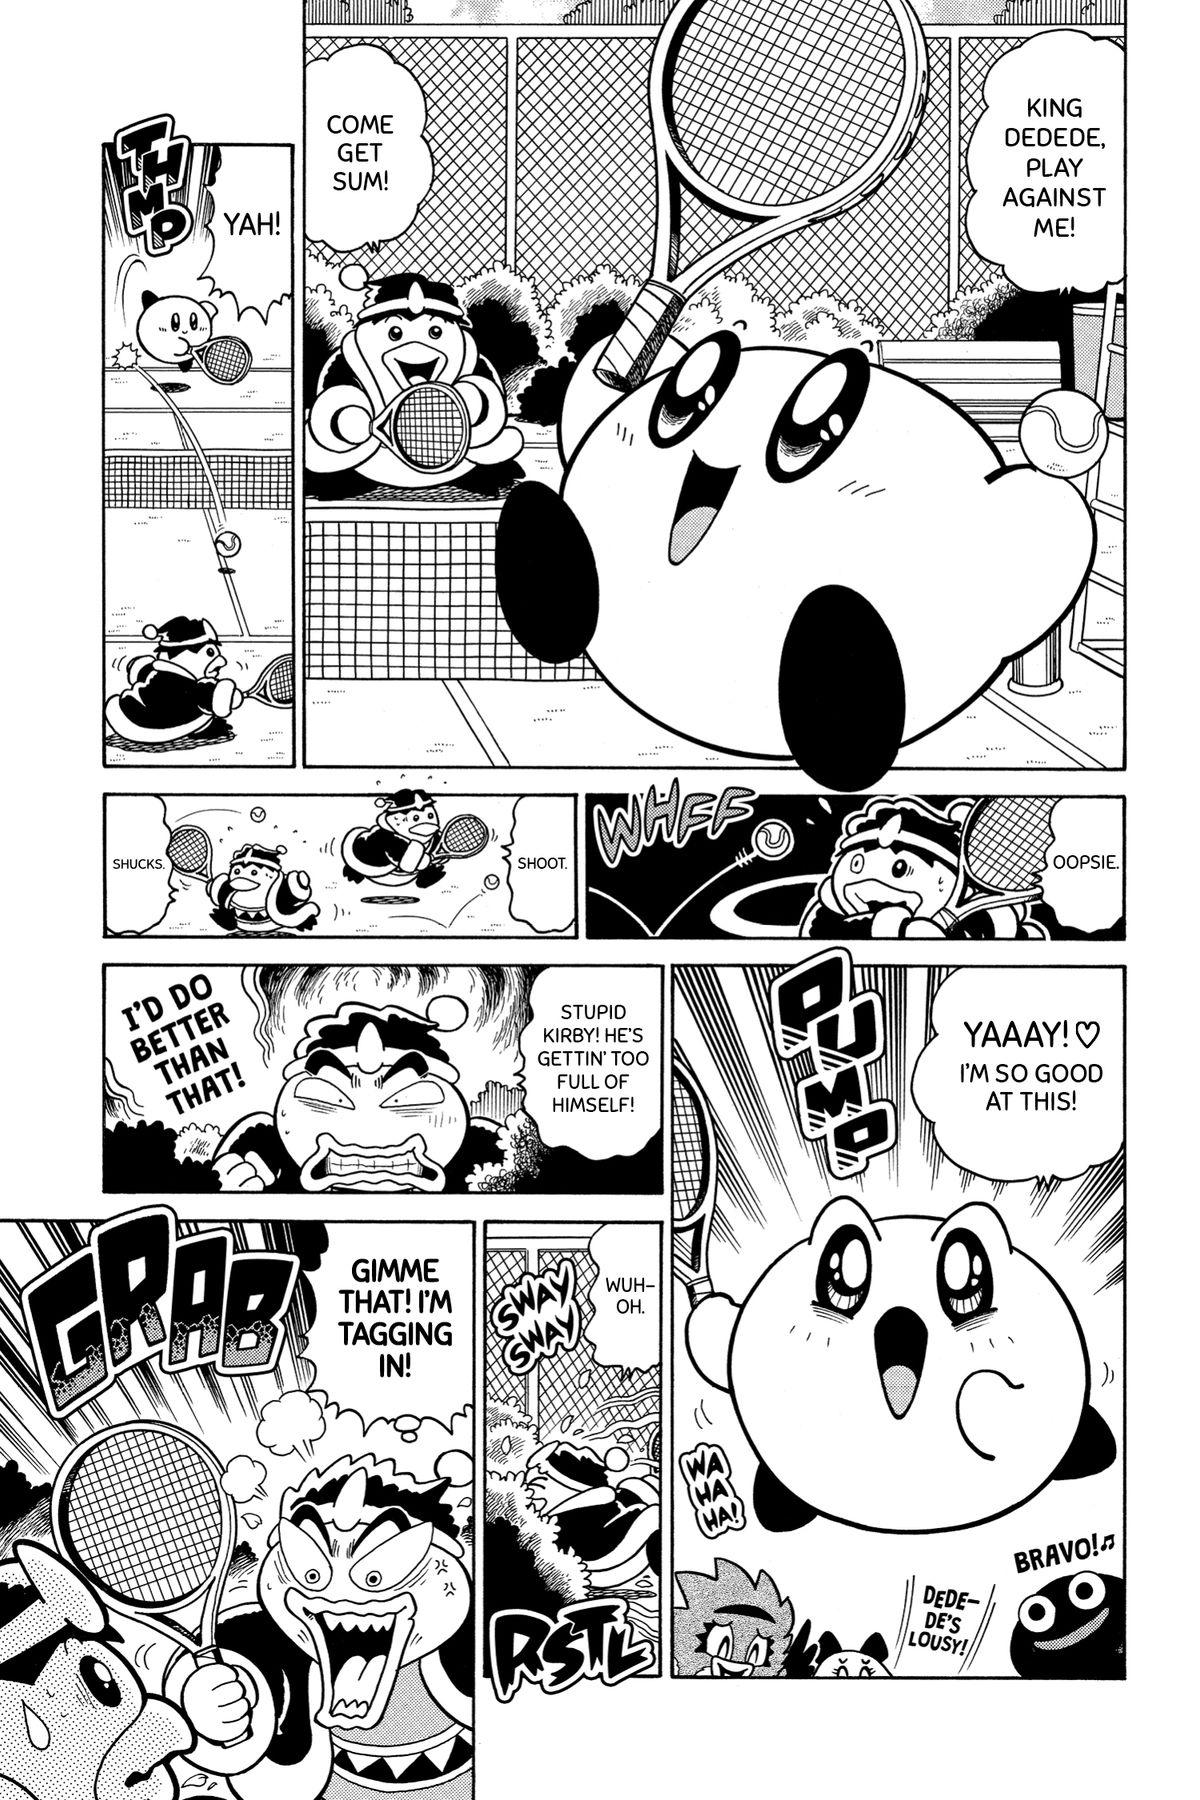 The Kirby manga was doing Kirby memes 25 years ago